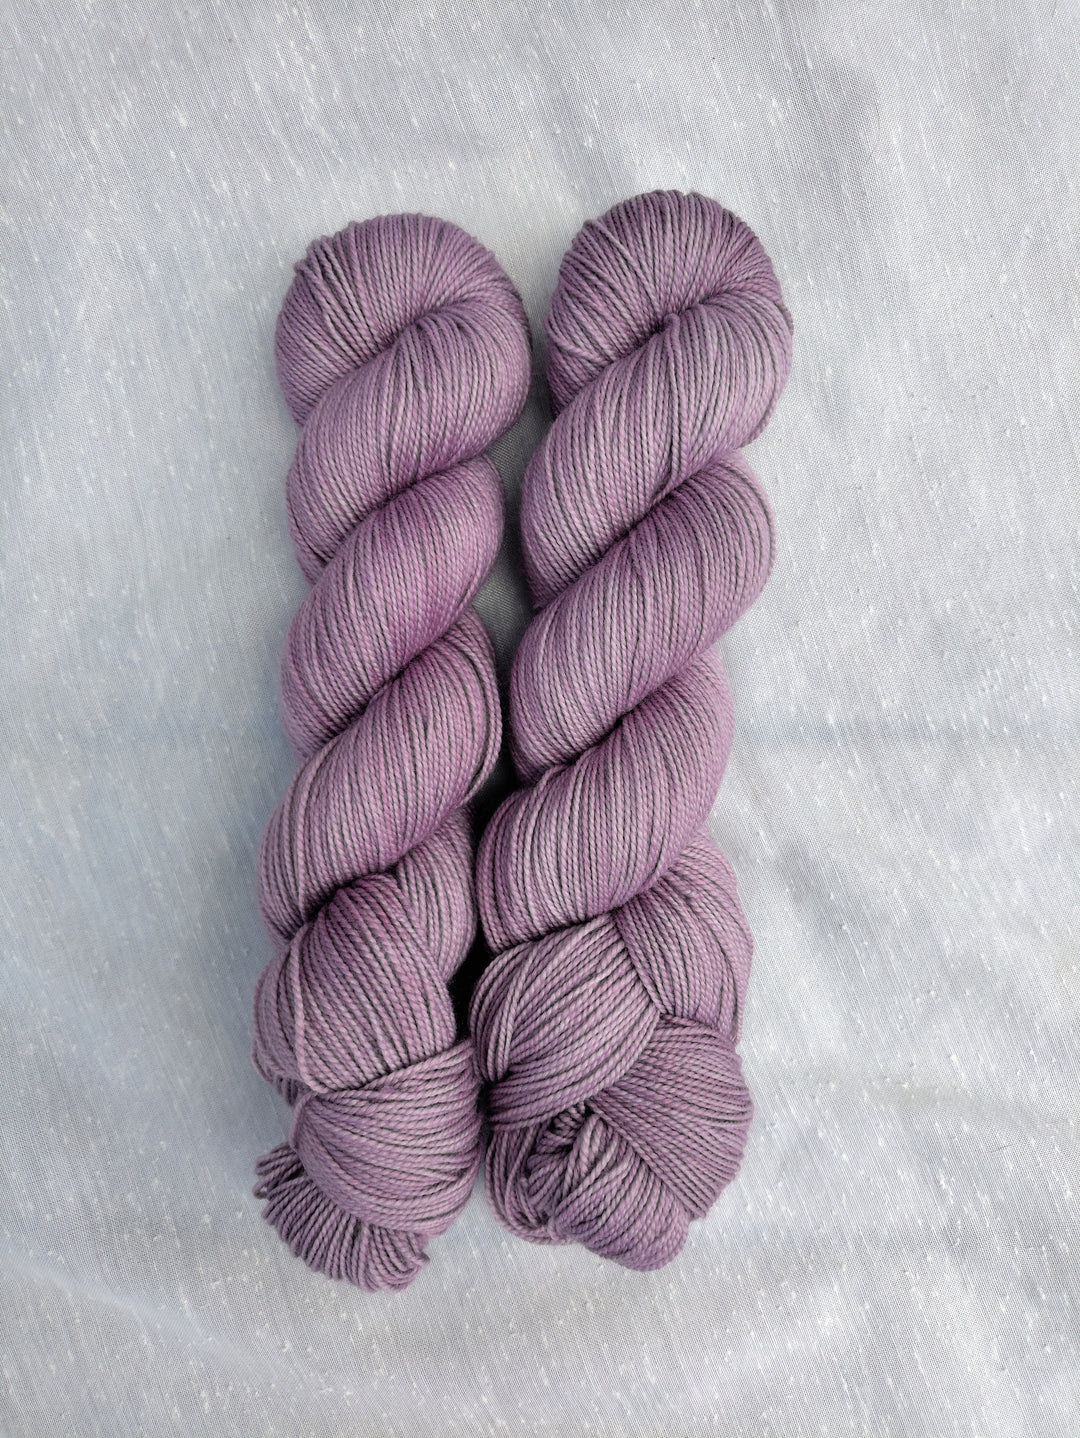 Pale purple semisolid yarn.